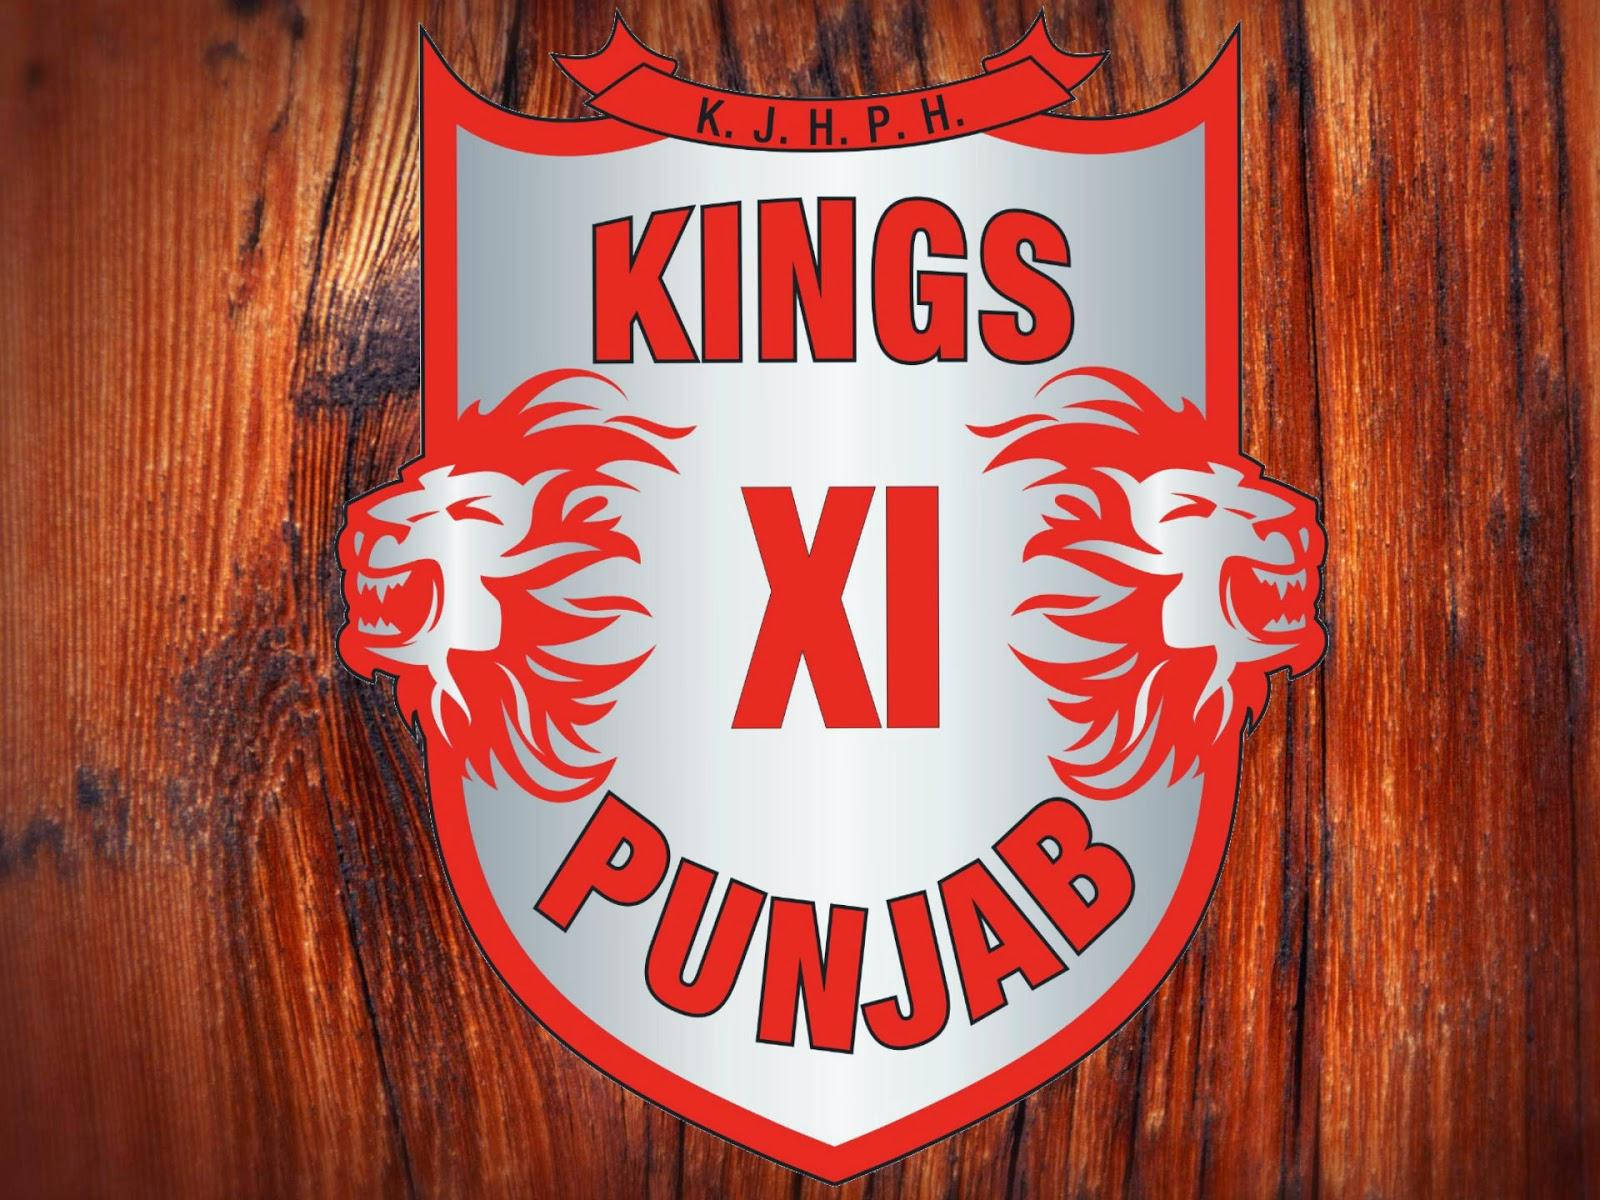 Punjab Kings On Wood Background